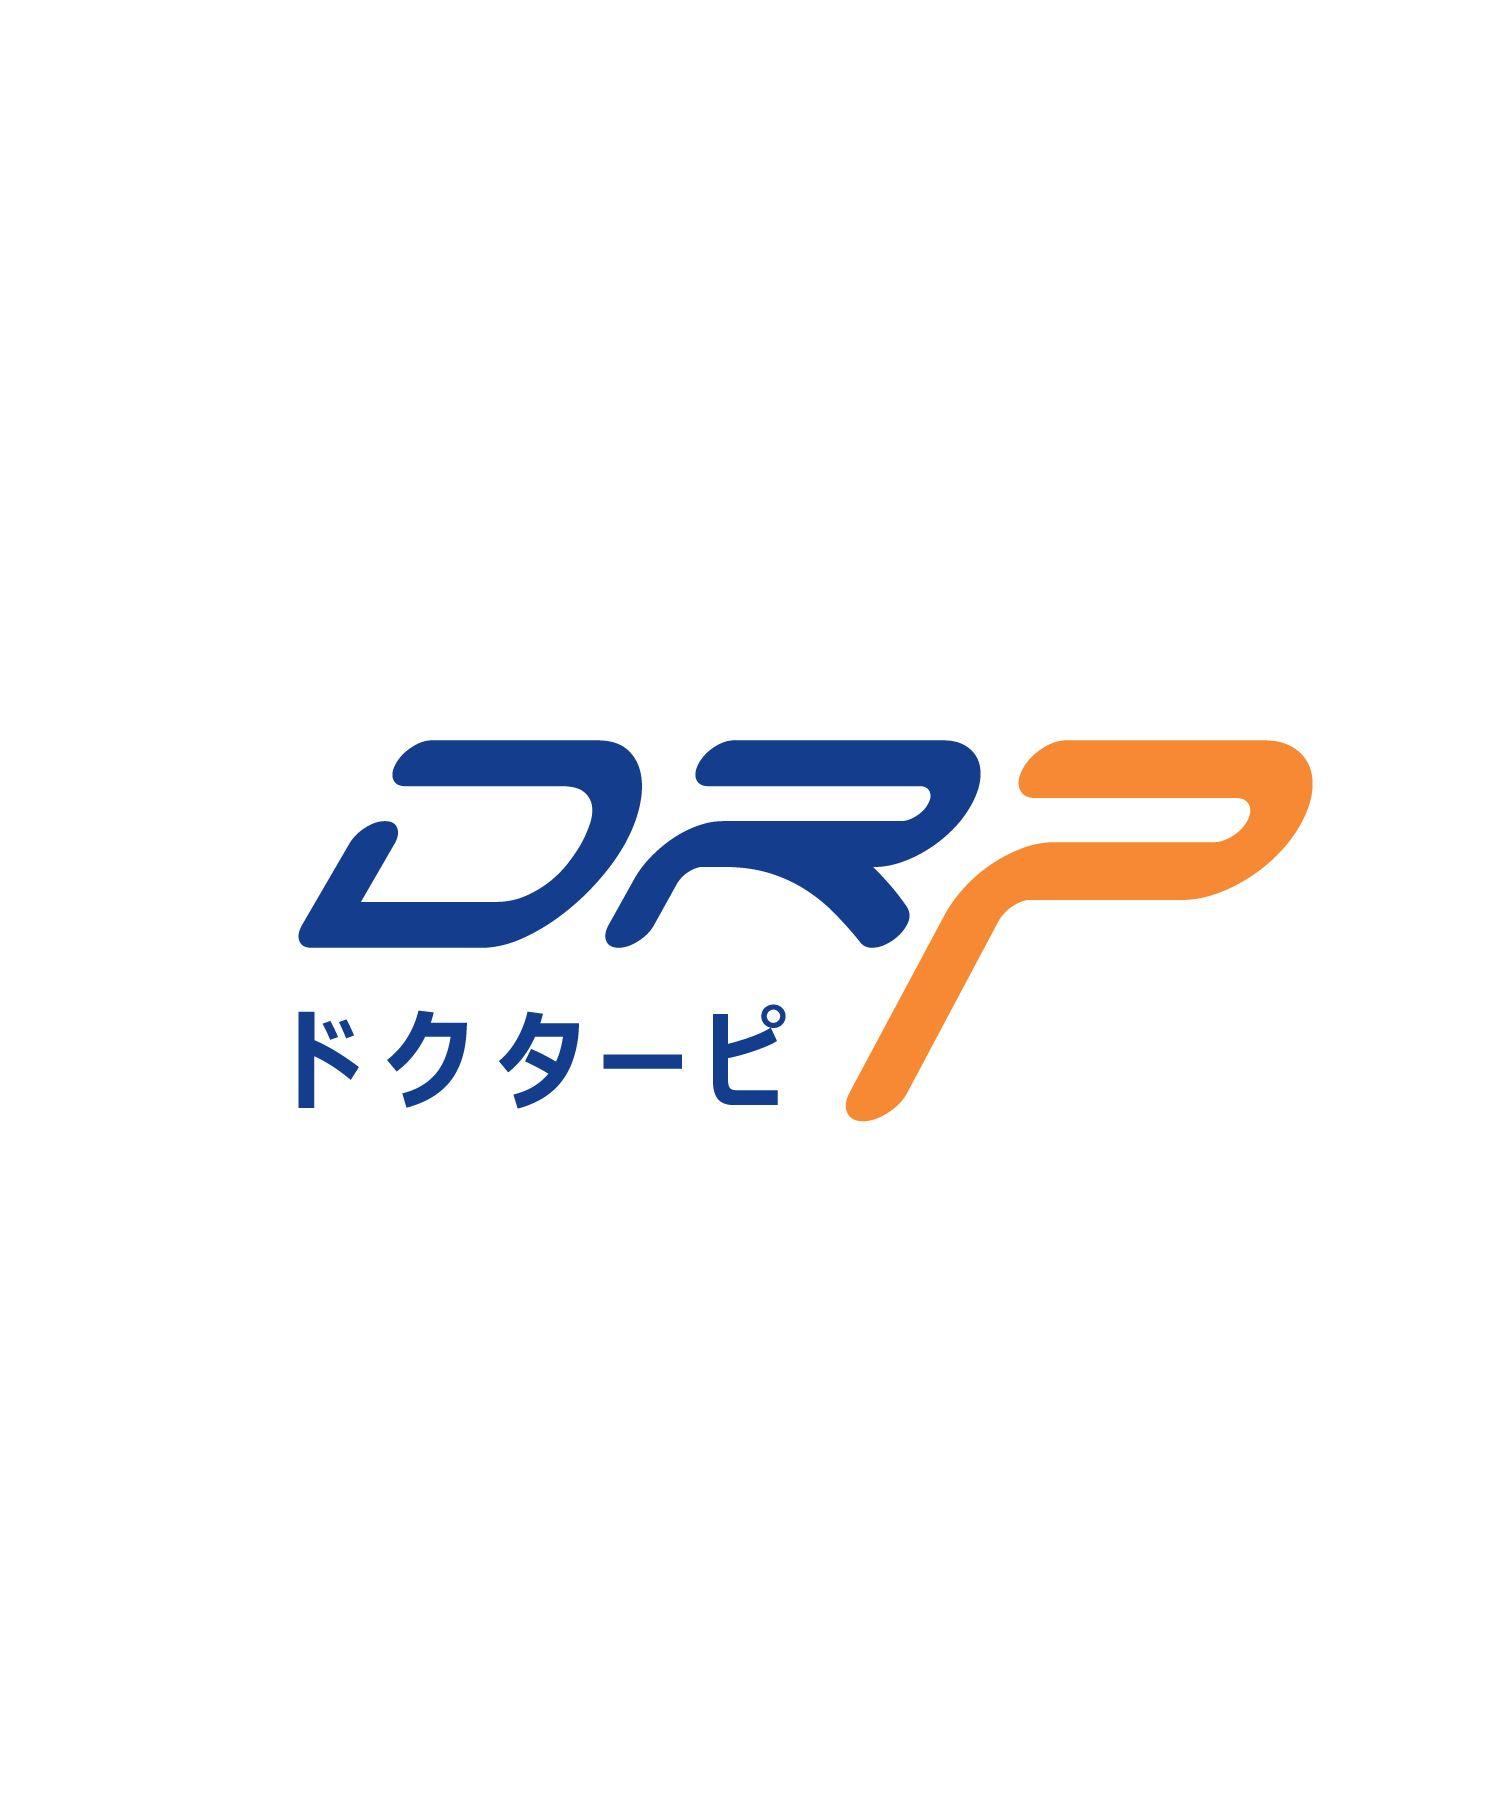 DRP Logo - DRP ドクターピ Logo : An anti aging product from Japan. Designed